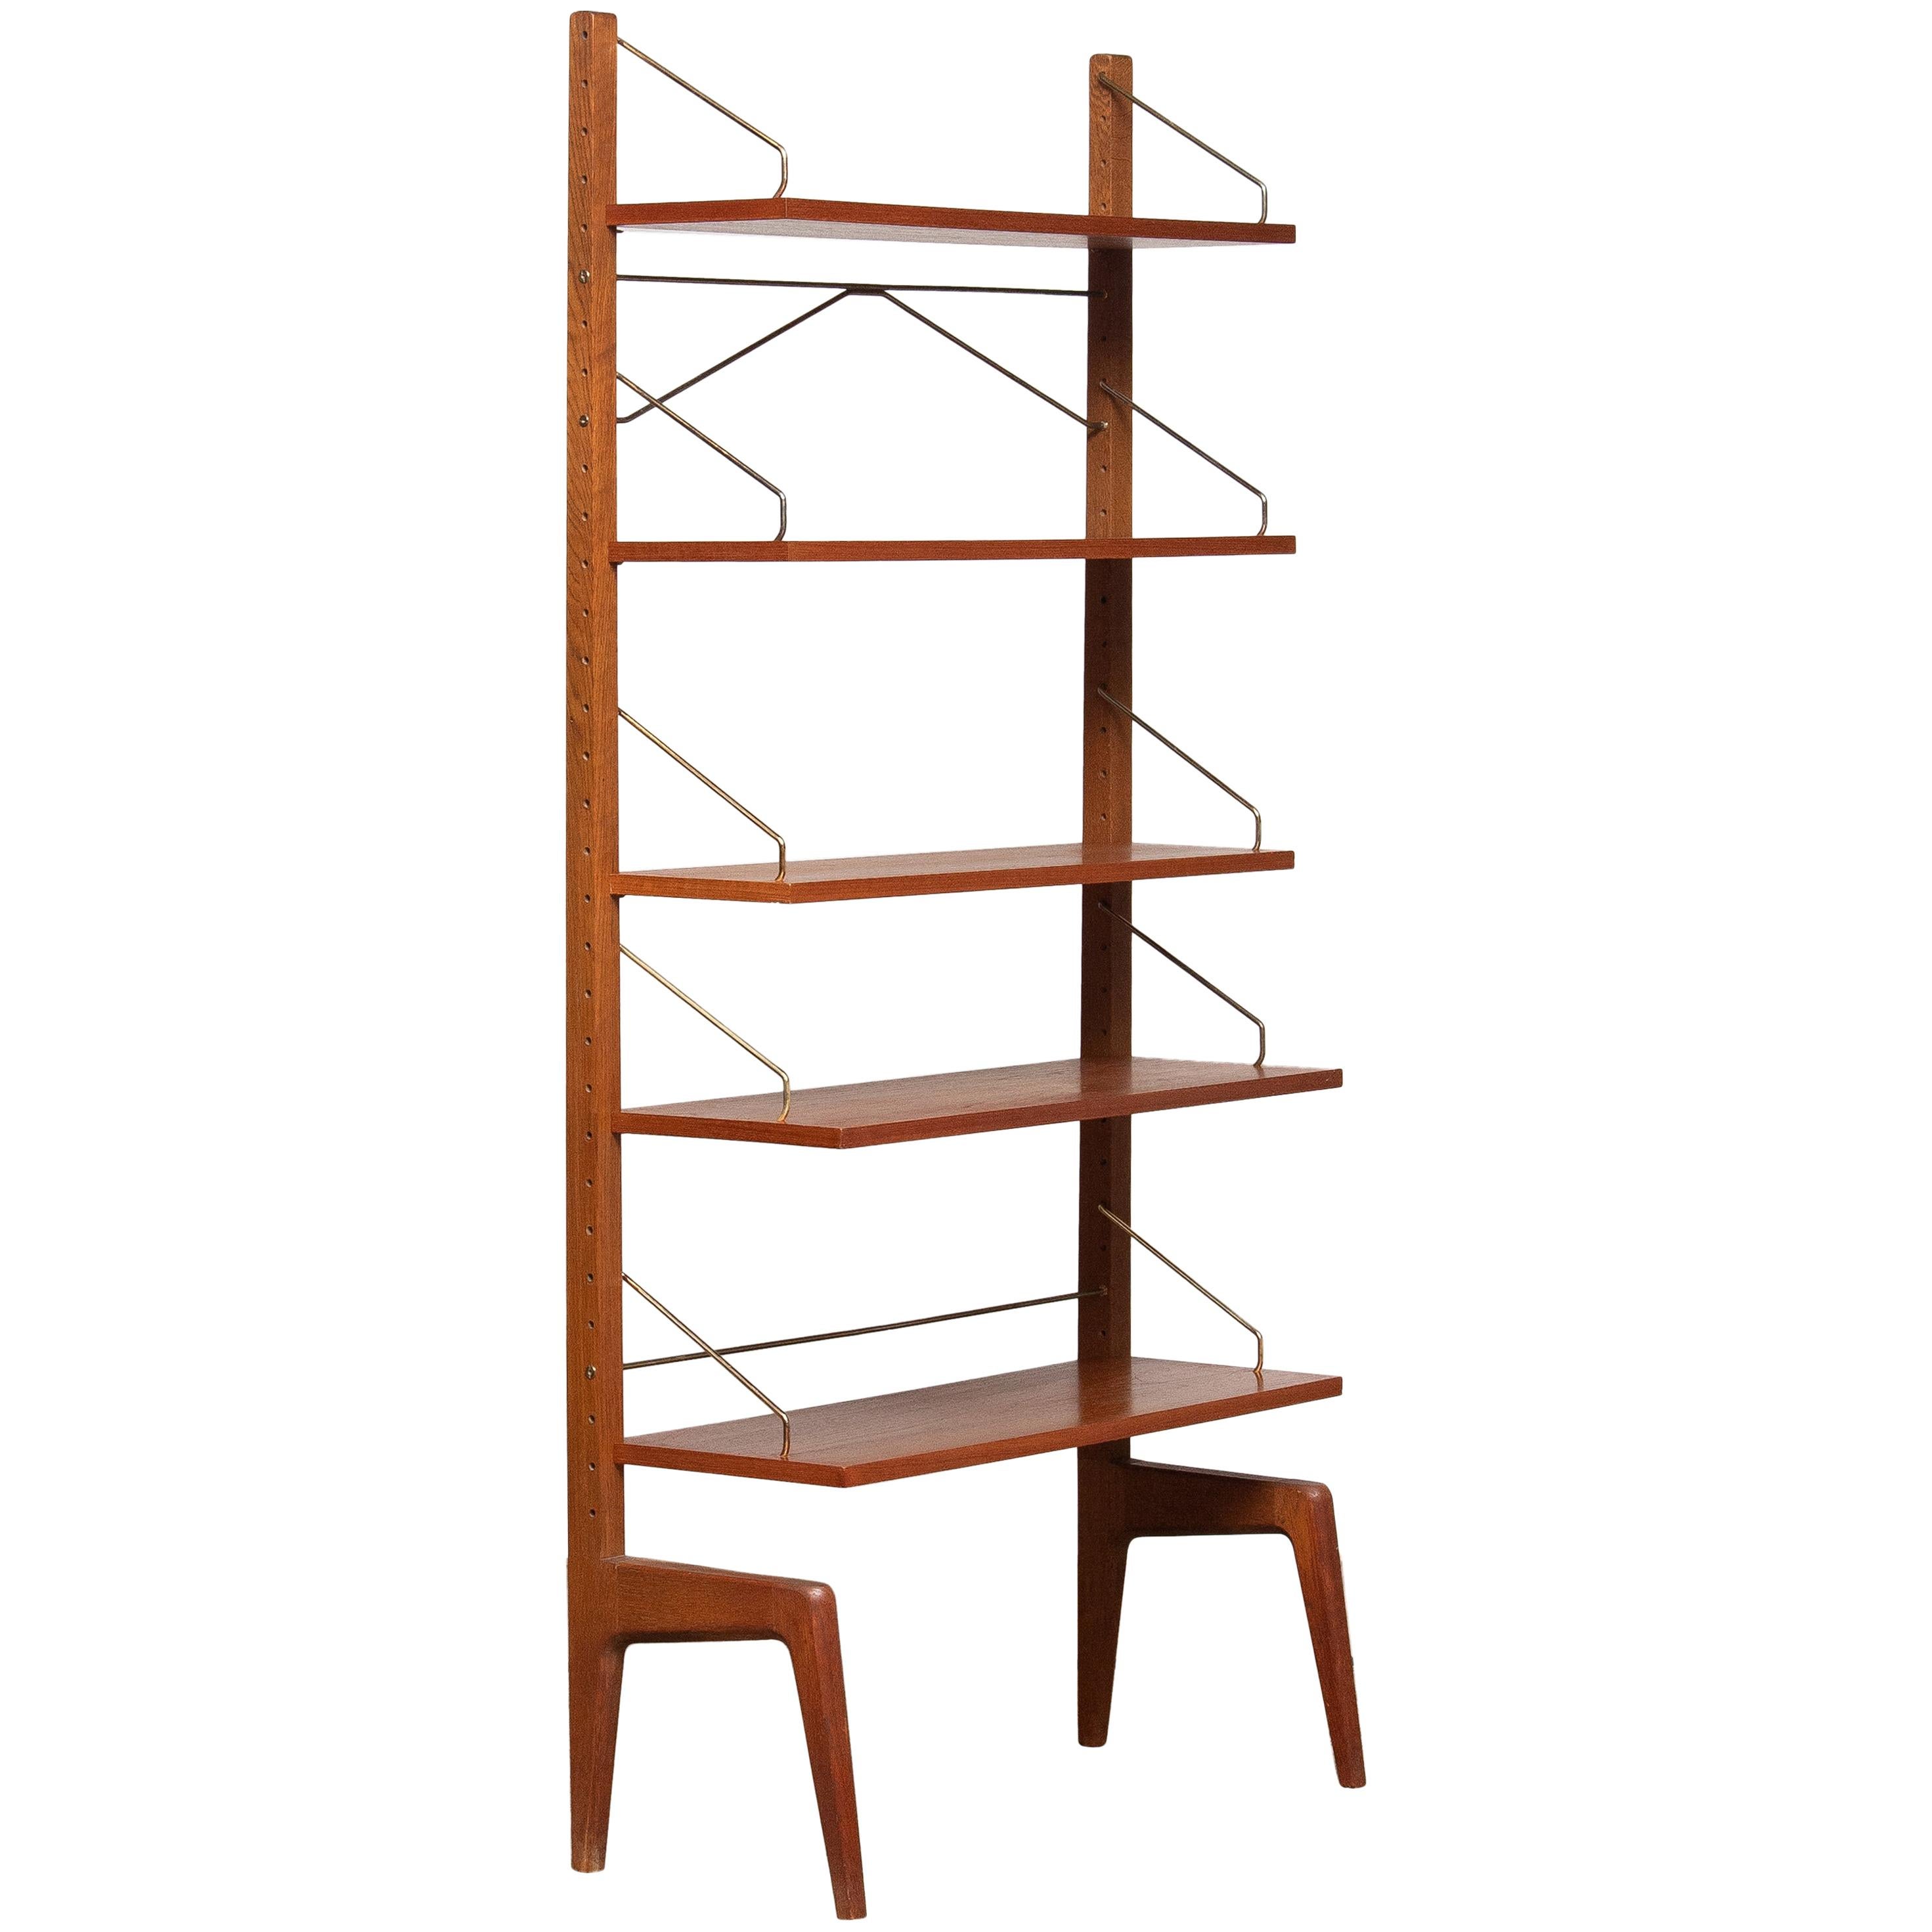 1950s Teak Bookcase Shelf System by Poul Cadovius for Gustav Bahus Free Standing